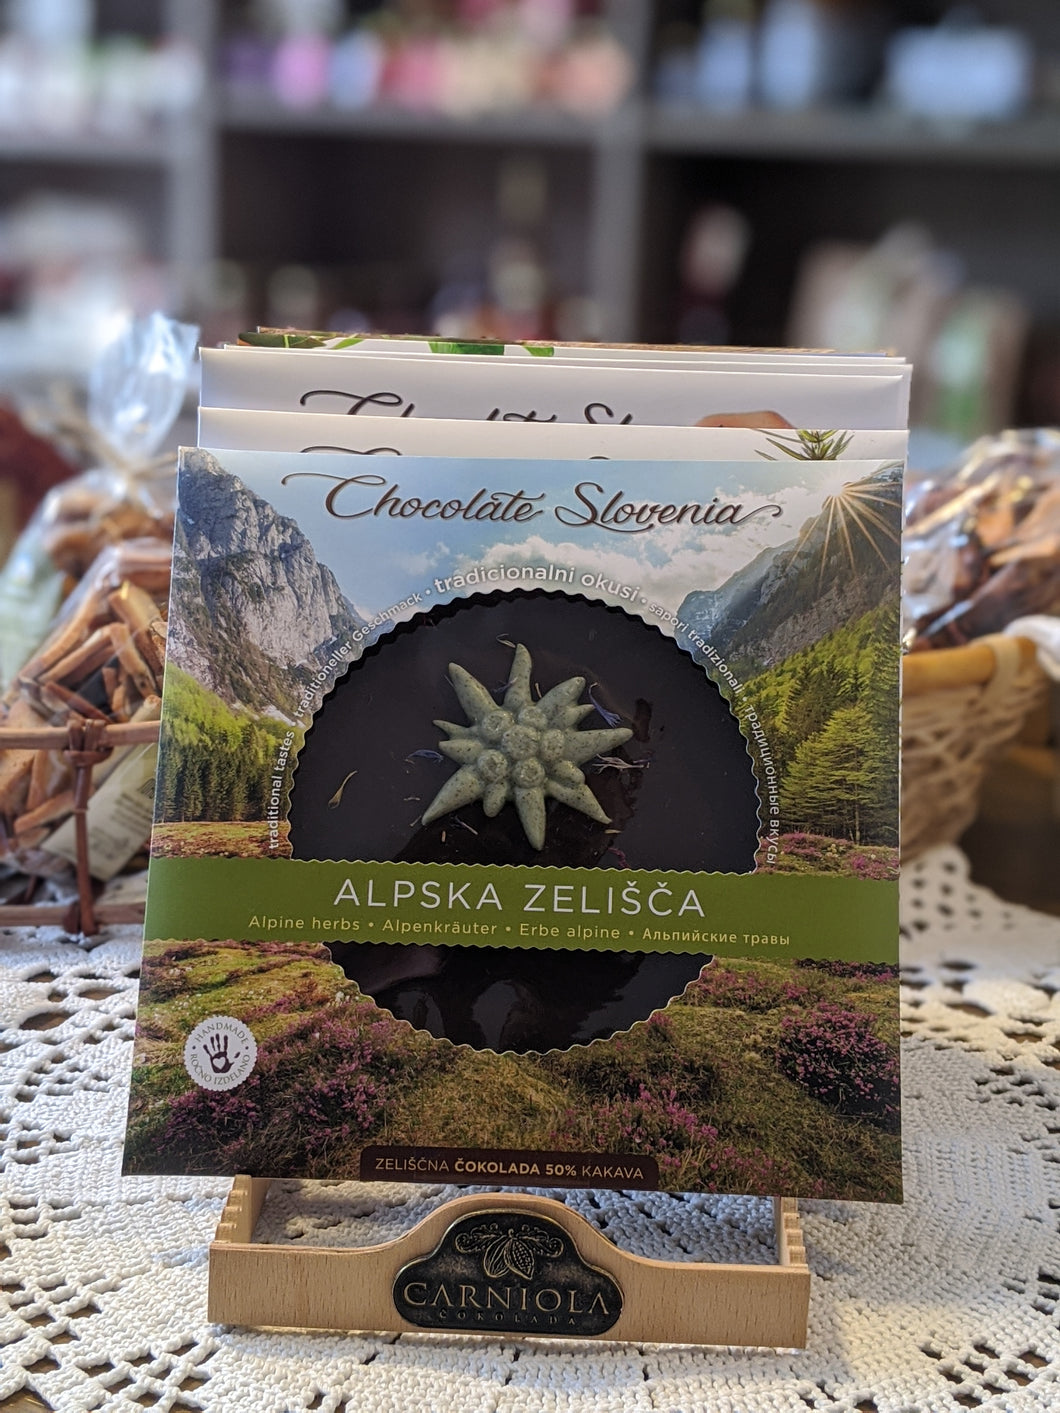 Chocolate Slovenia - with alpine herbs 135 g